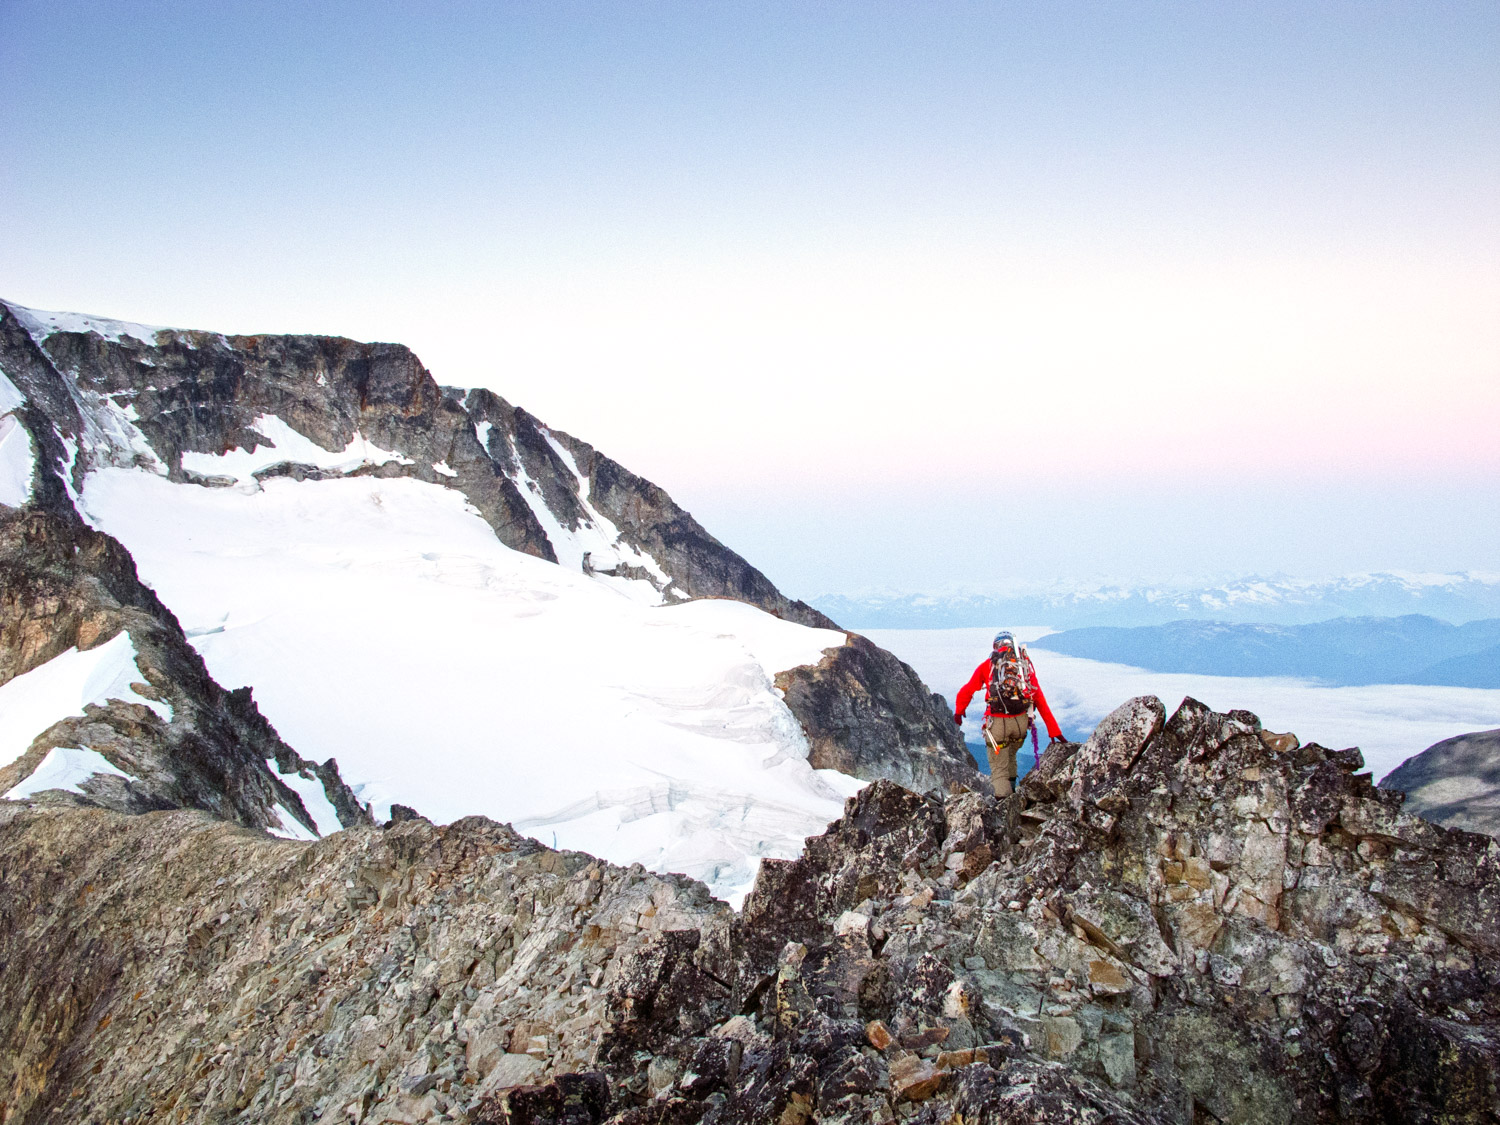  Lone climber on a knife edge ridge. Wedge Mountain, Canada 